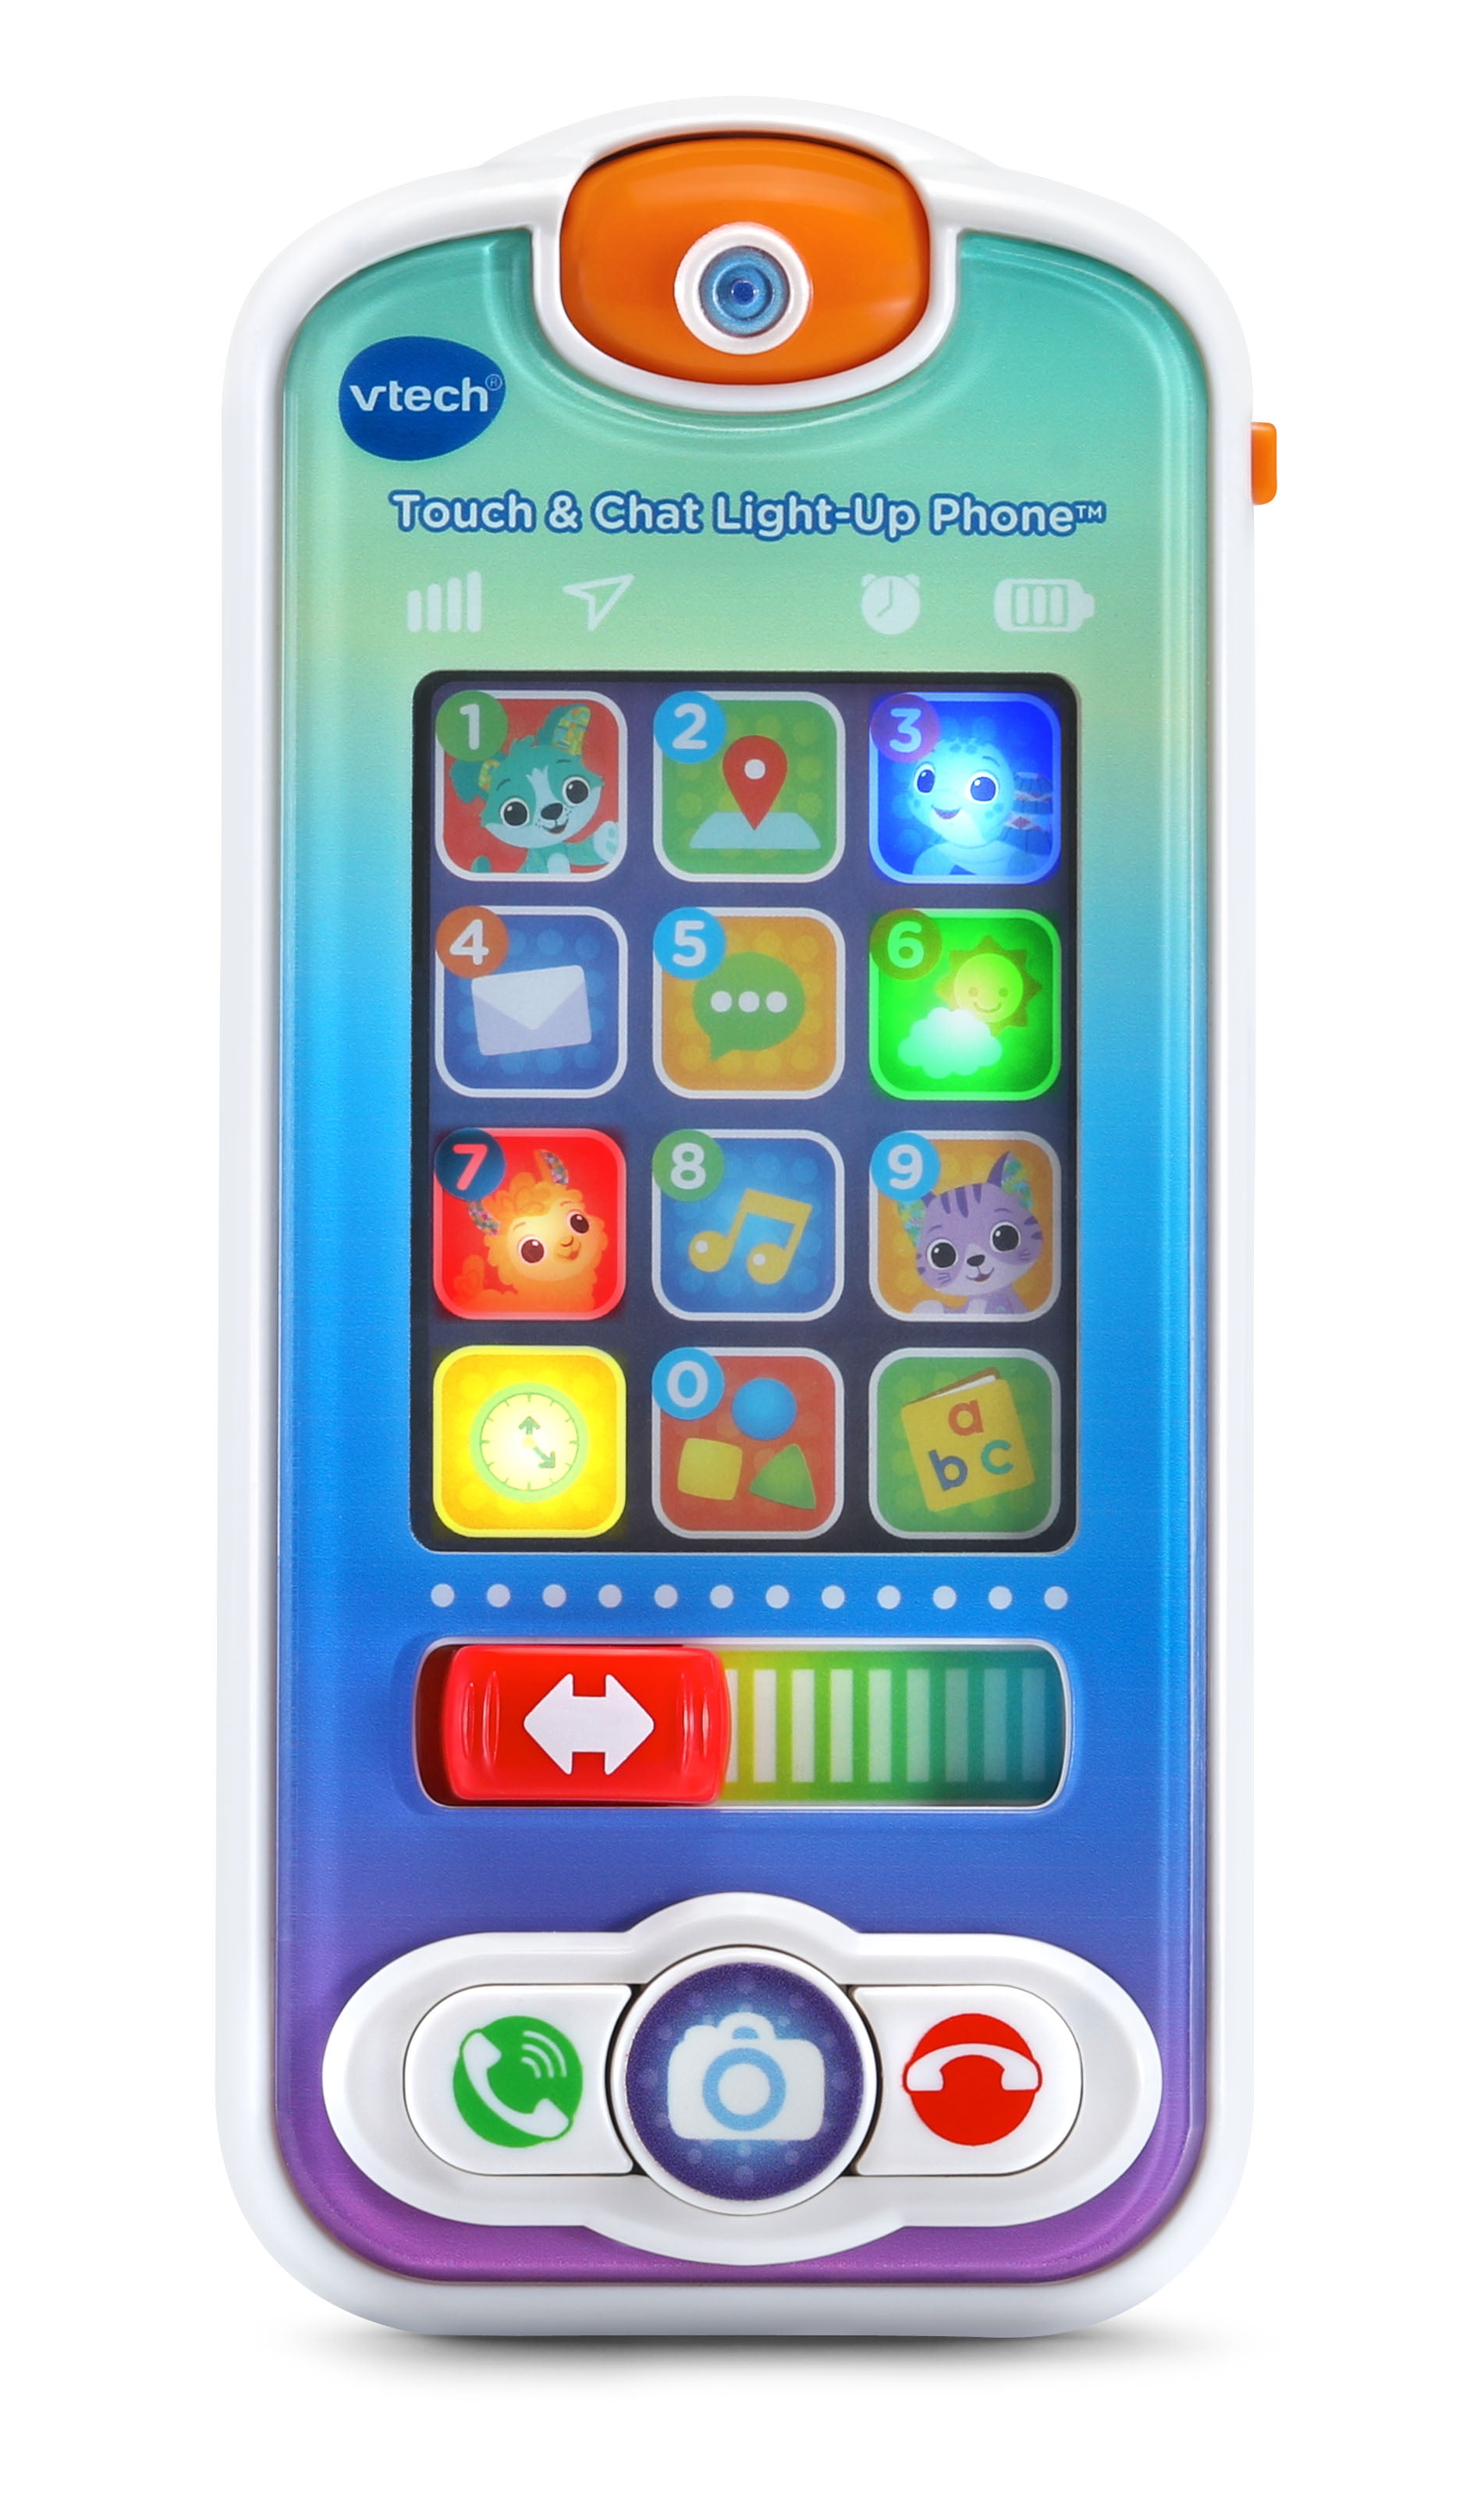 Simba Smart Phone ABC für Kleinkinder Babytelefon Telefon Spielzeughandy 